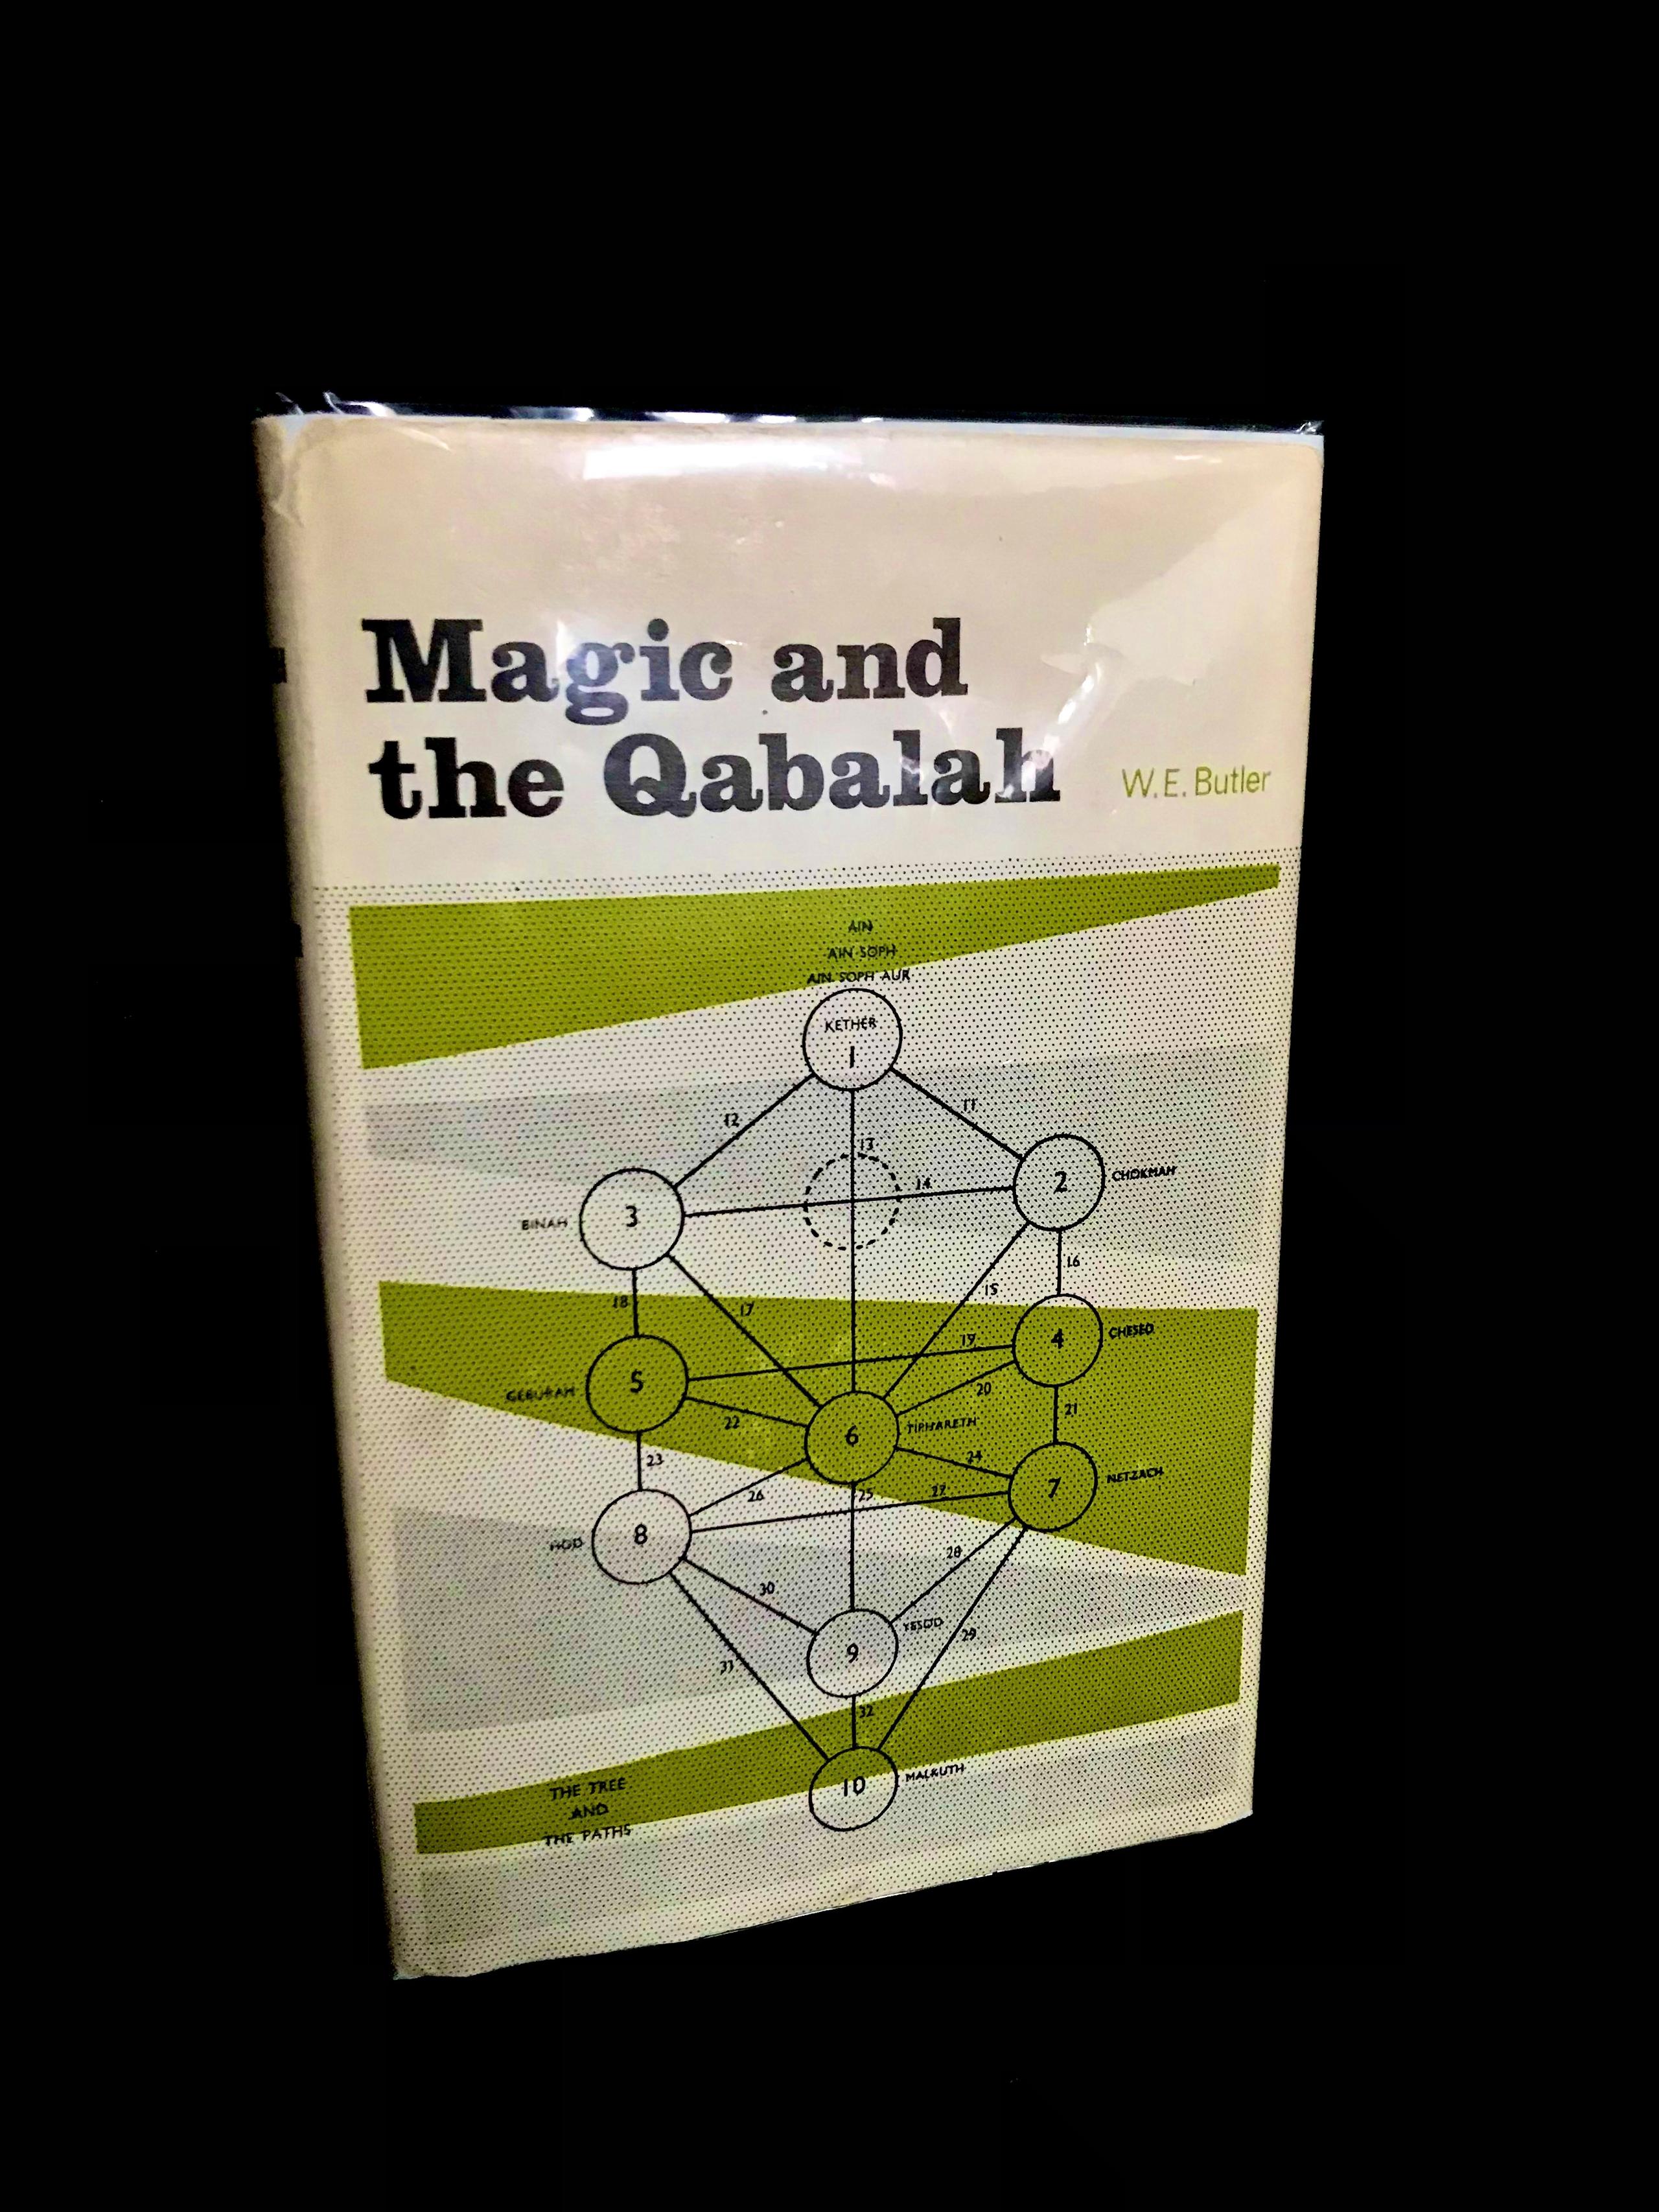 Magic and the Qabalah by W. E. Butler